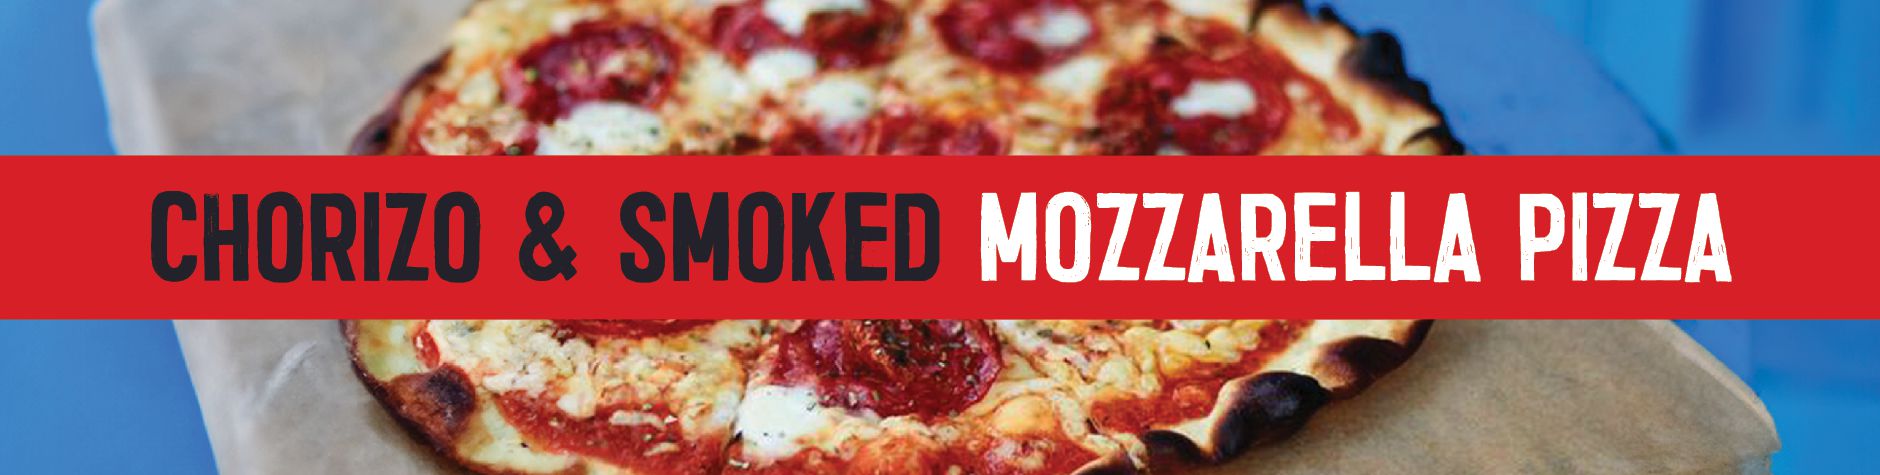 Chorizo & Smoked Mozzarella Pizza